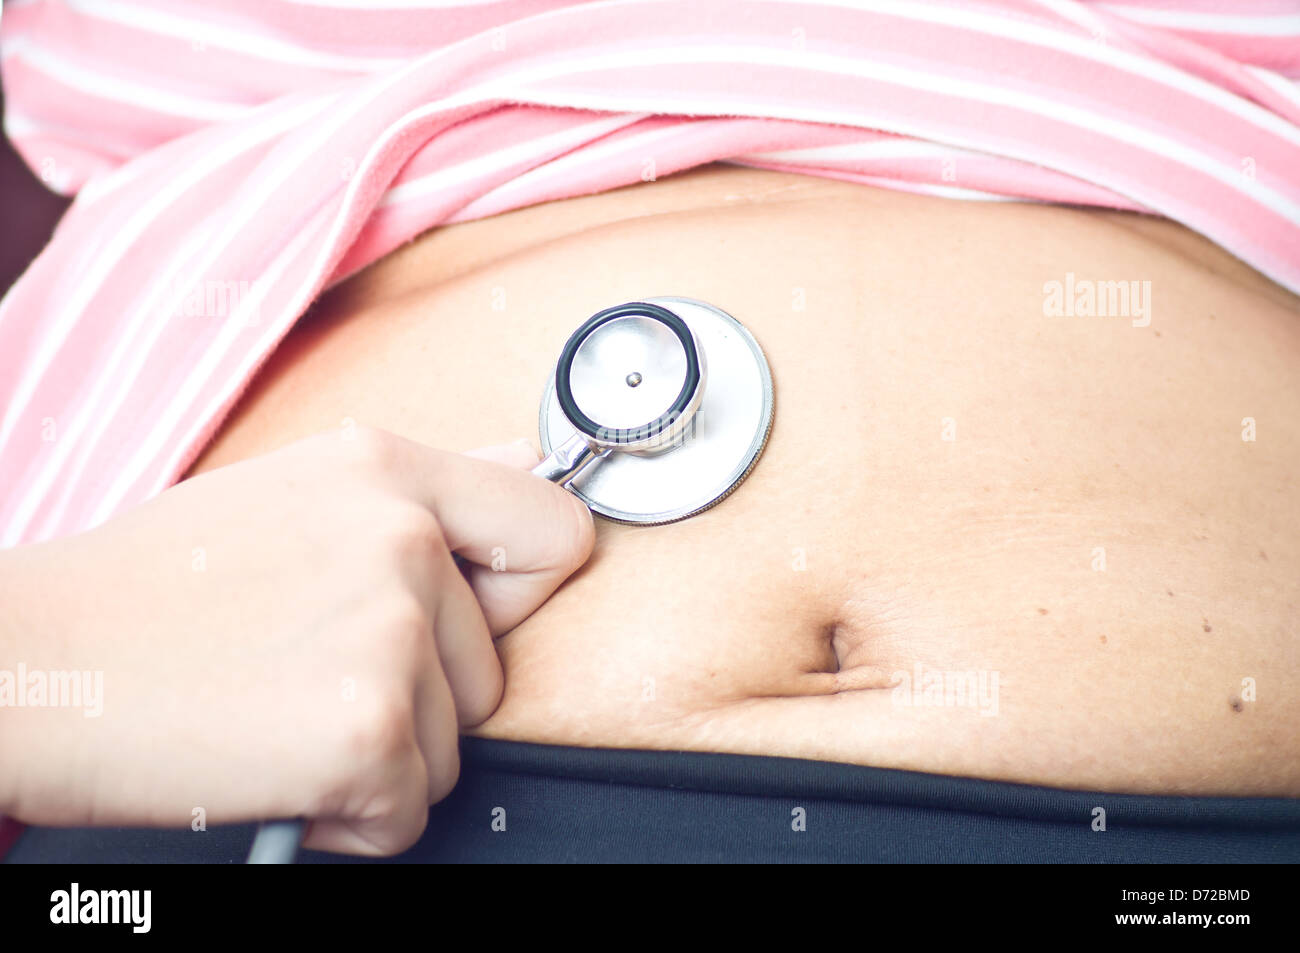 examination abdomen by doctor and use stethoscope Stock Photo - Alamy